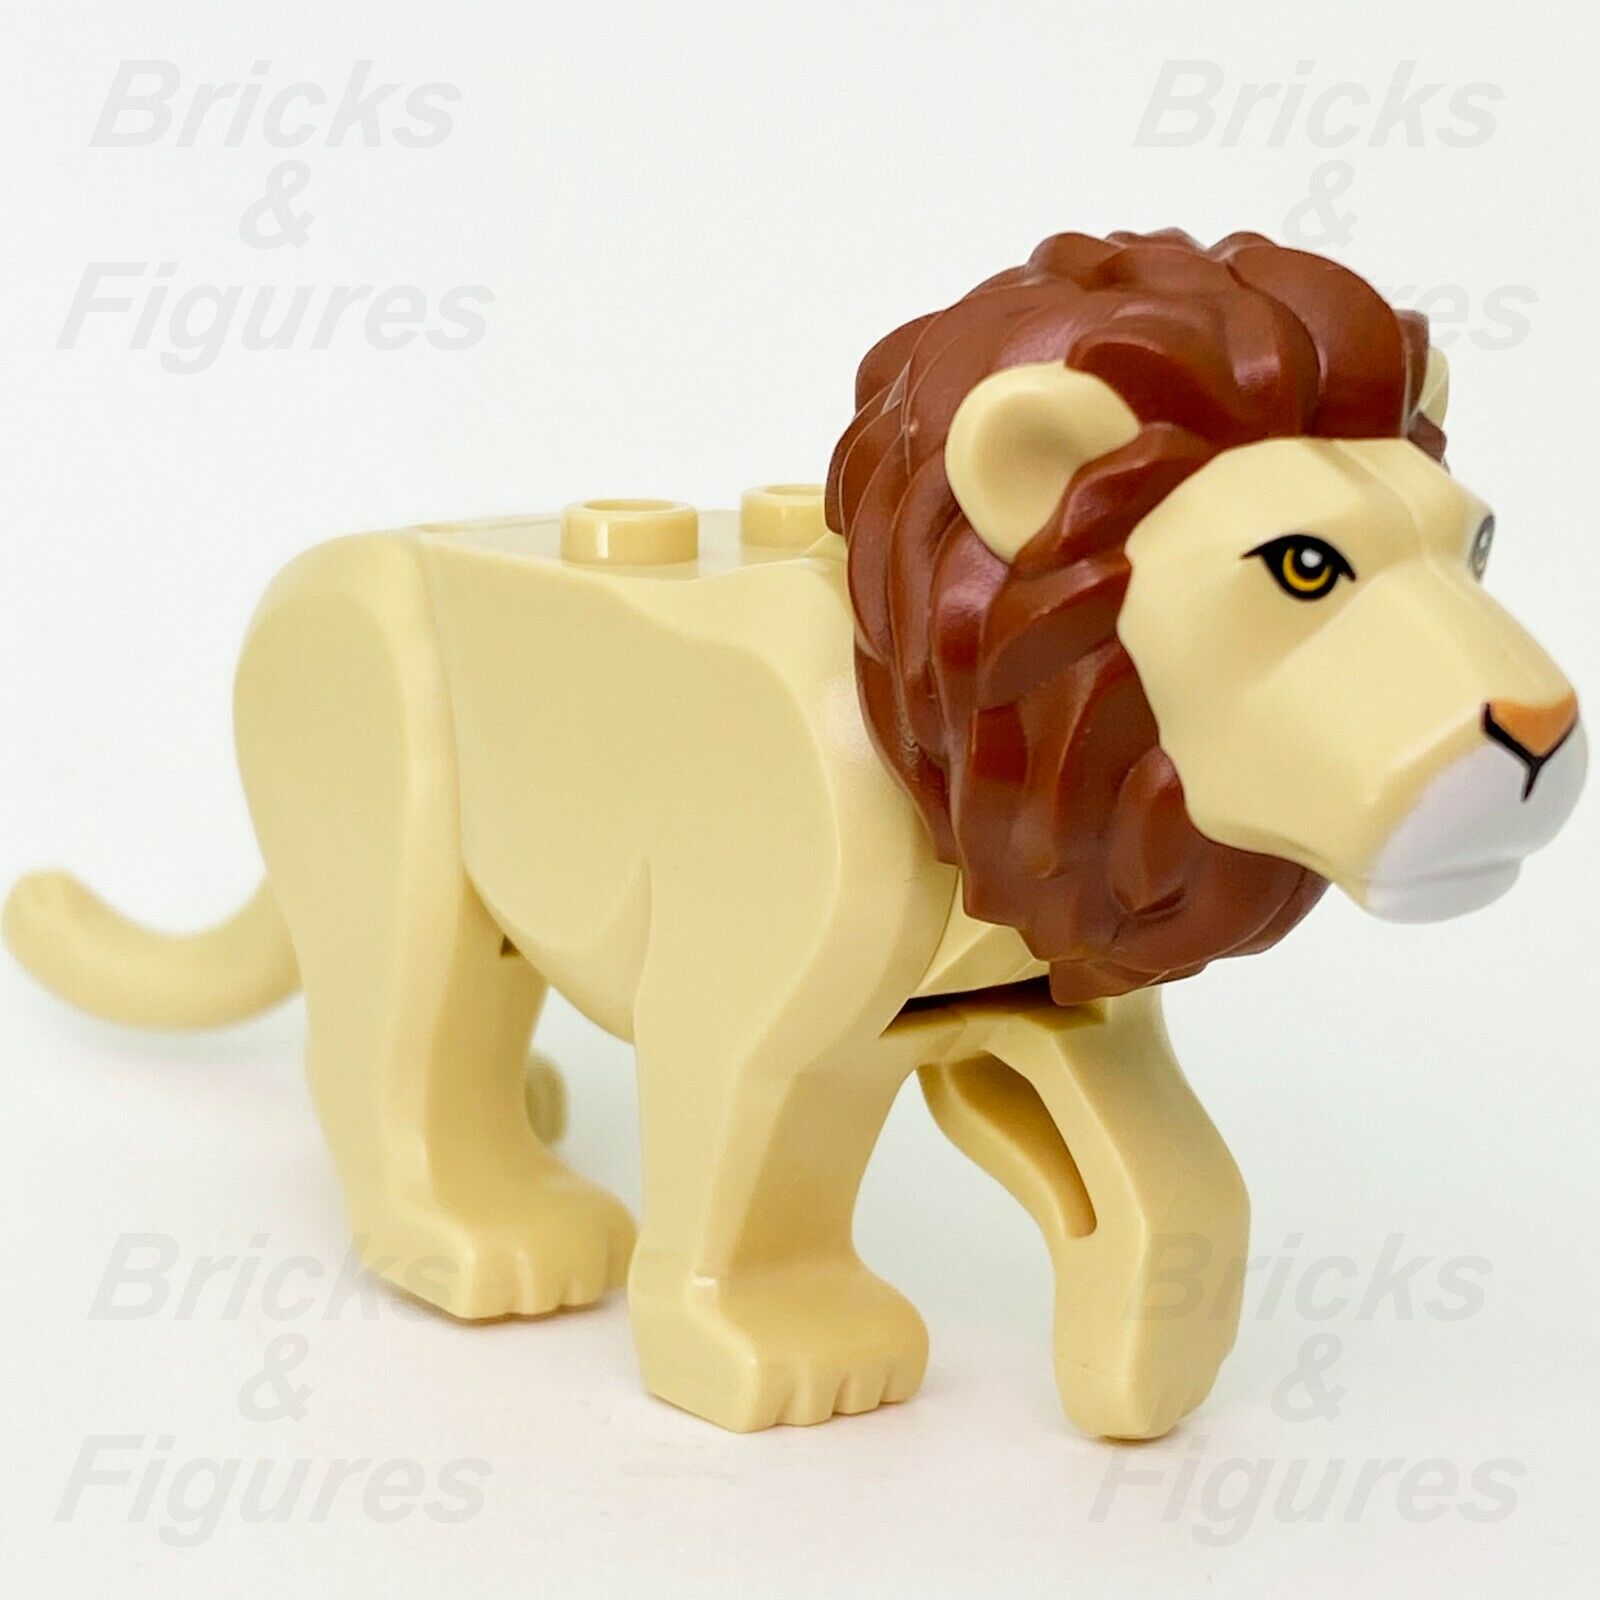 New LEGO Town City Lion Wildlife Rescue Large Cat Animal Minifigure Part 60301 - Bricks & Figures